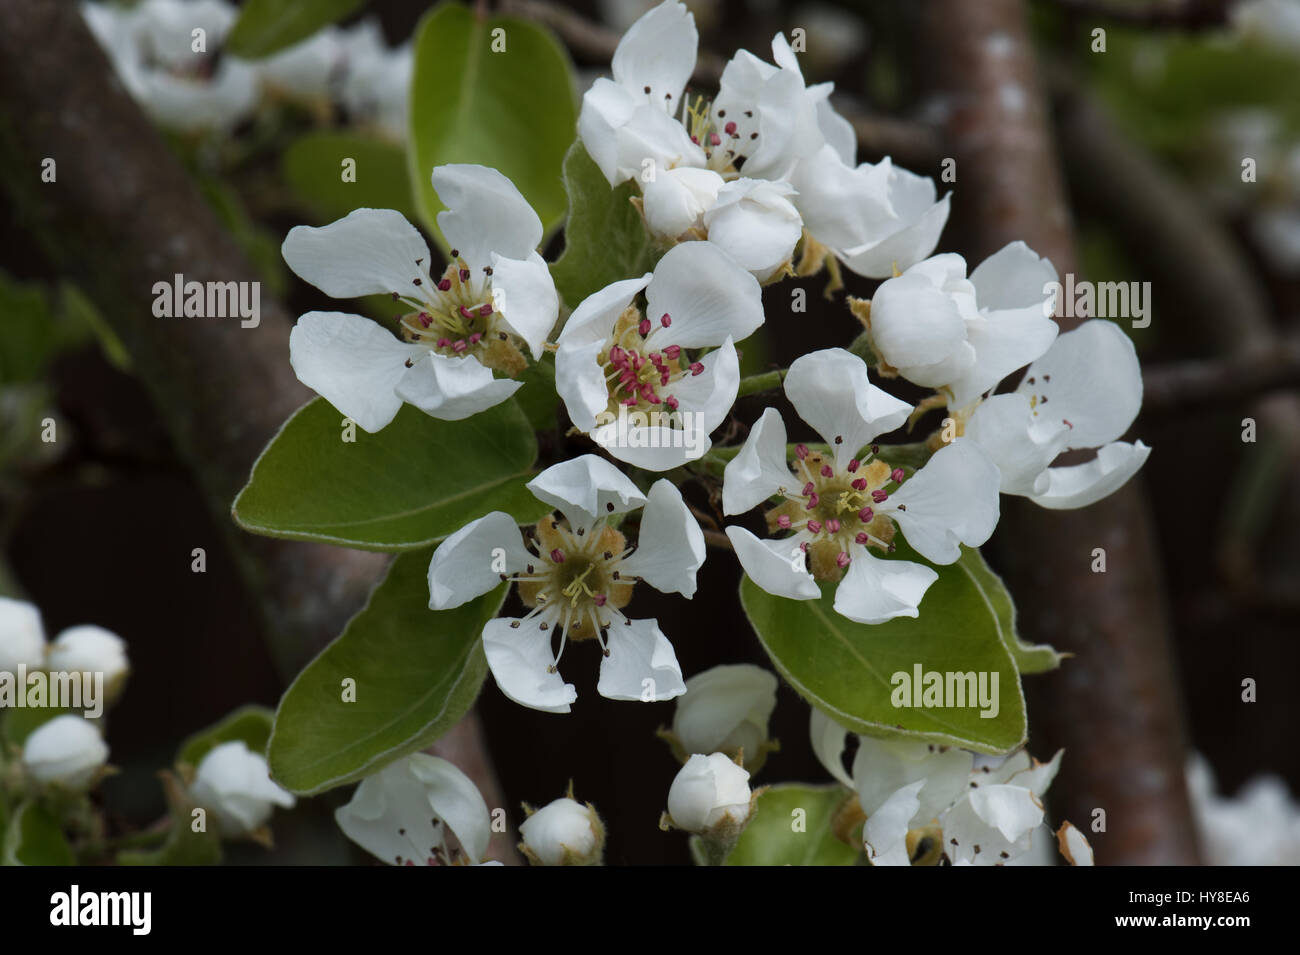 Beurre Hardy pear blossom Stock Photo